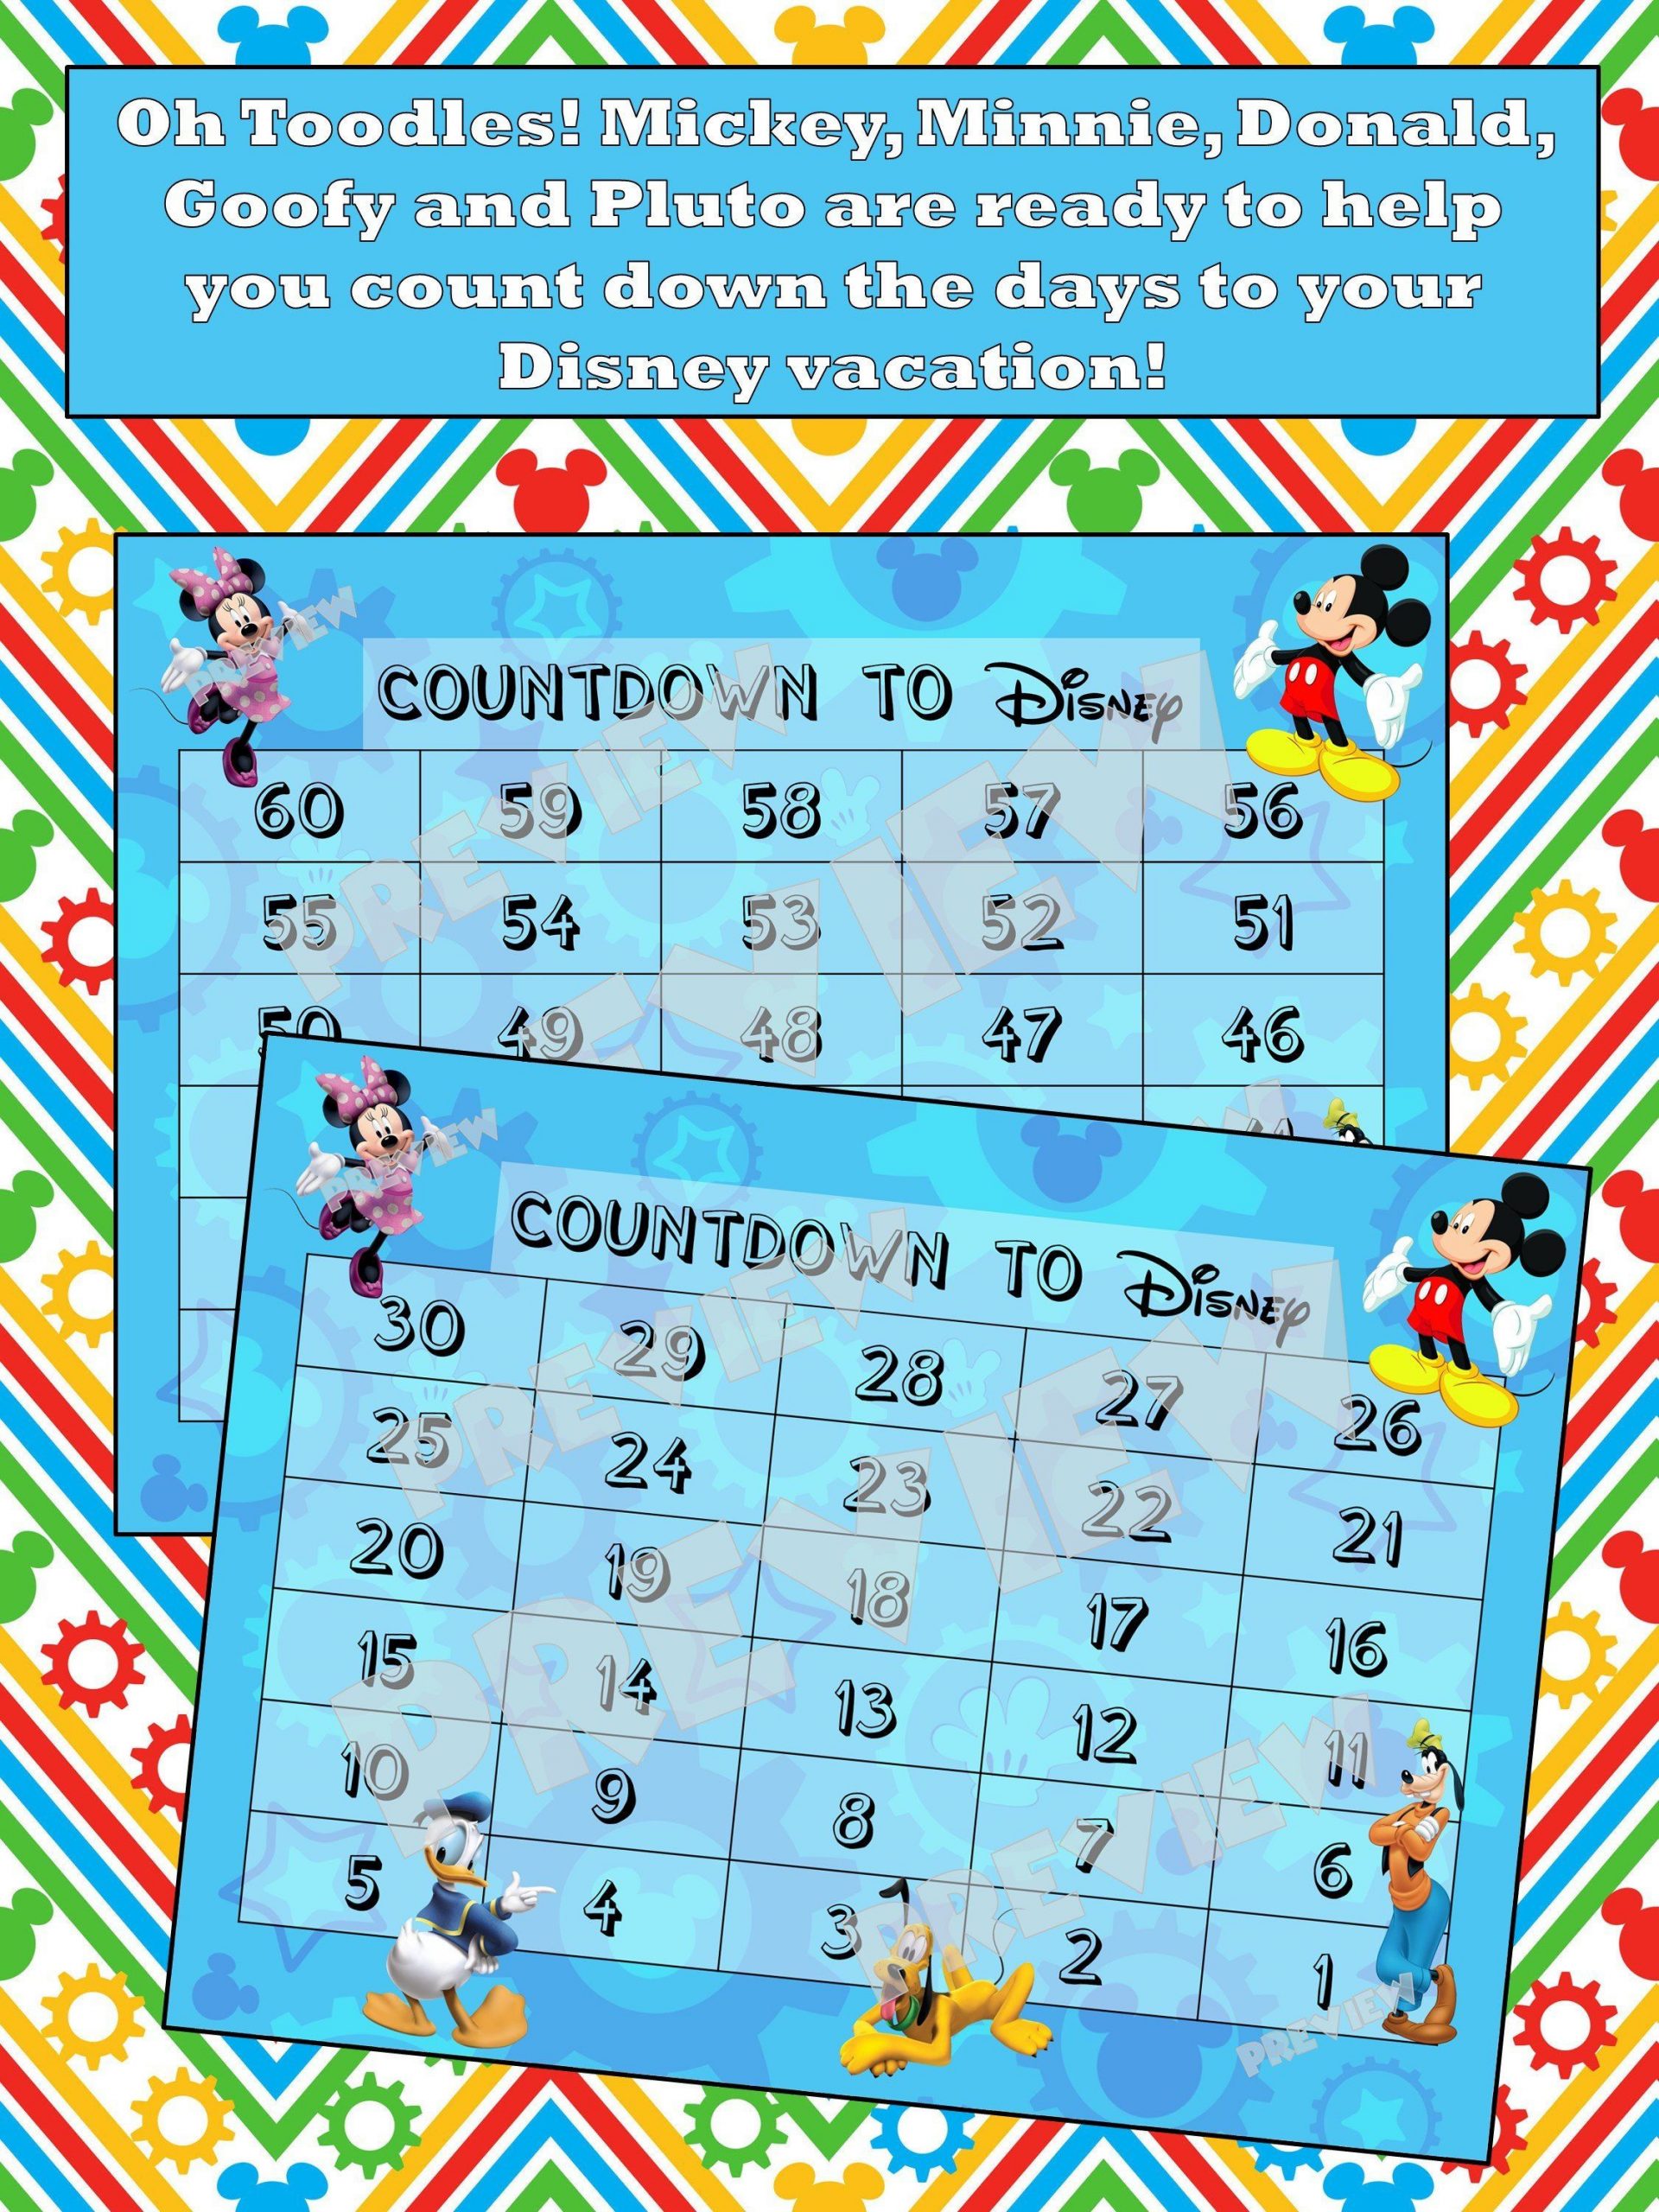 Disney Countdown Calendar Mickey Minnie Donald Goofy